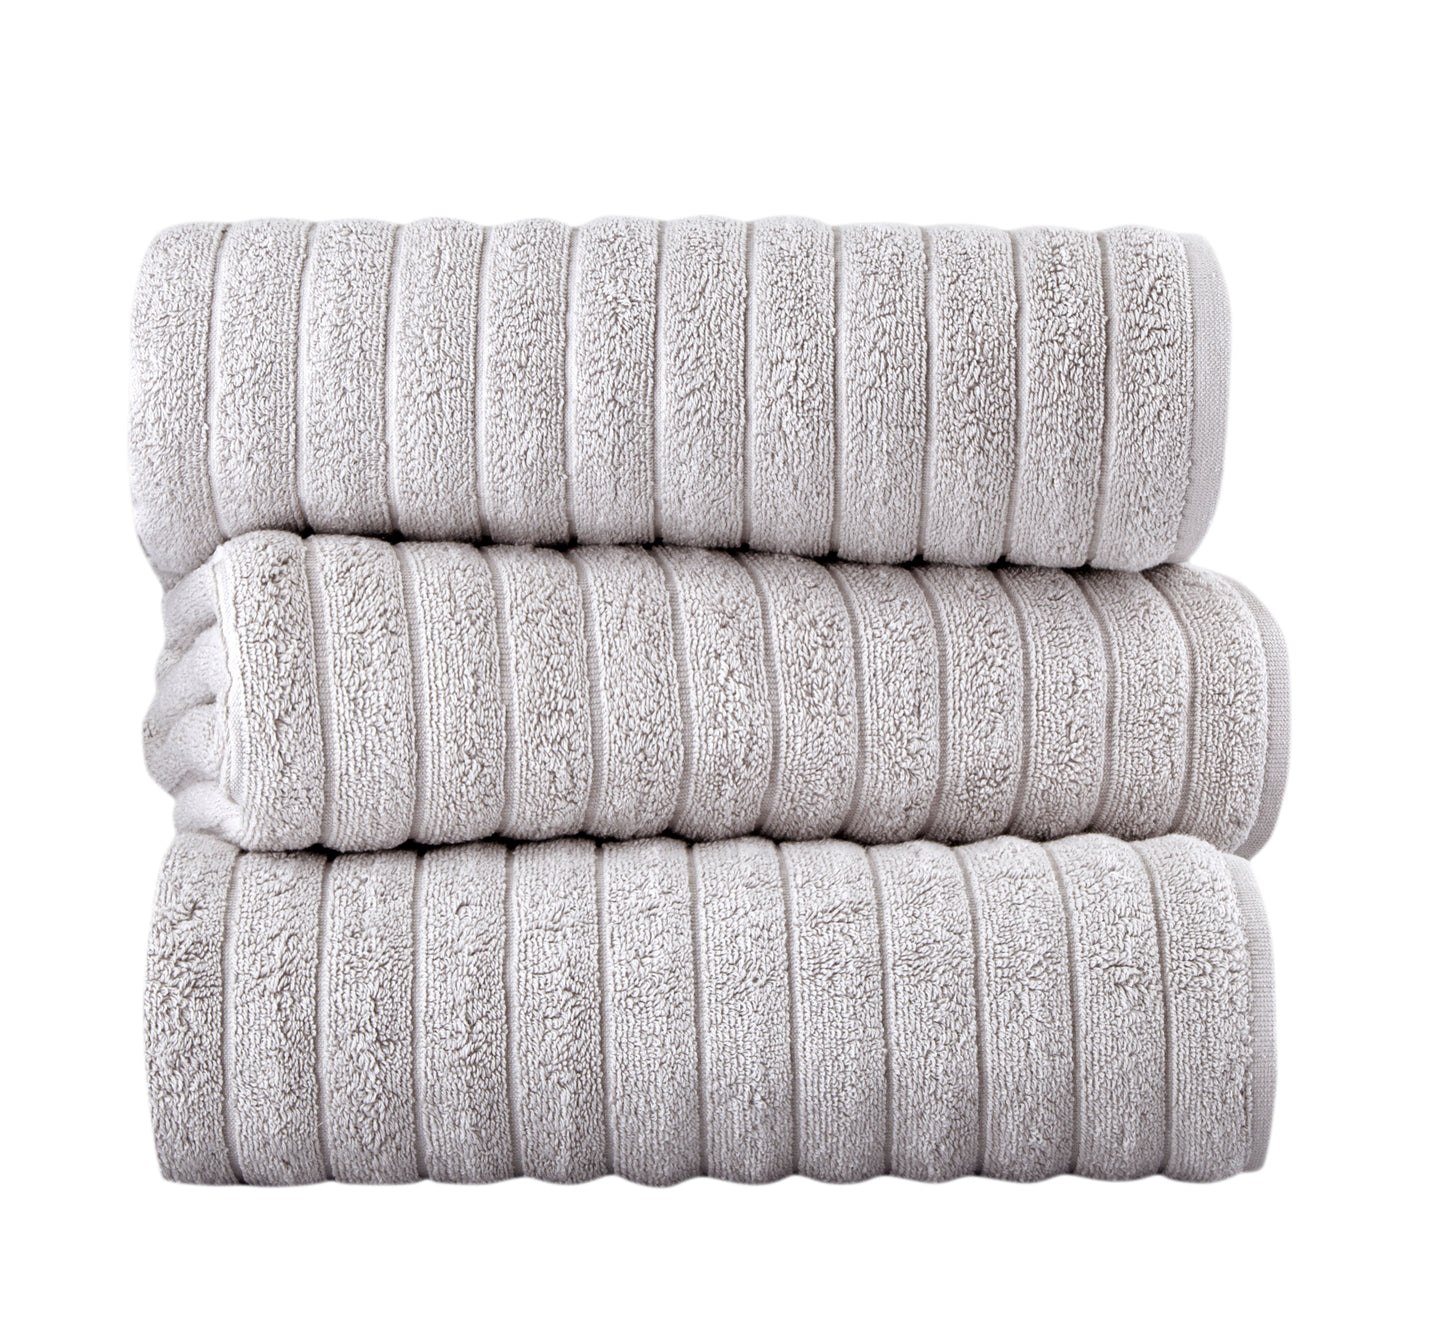 Brampton Turkish Cotton Bath Sheet - 3 Pieces | Classic Turkish Towels Gray